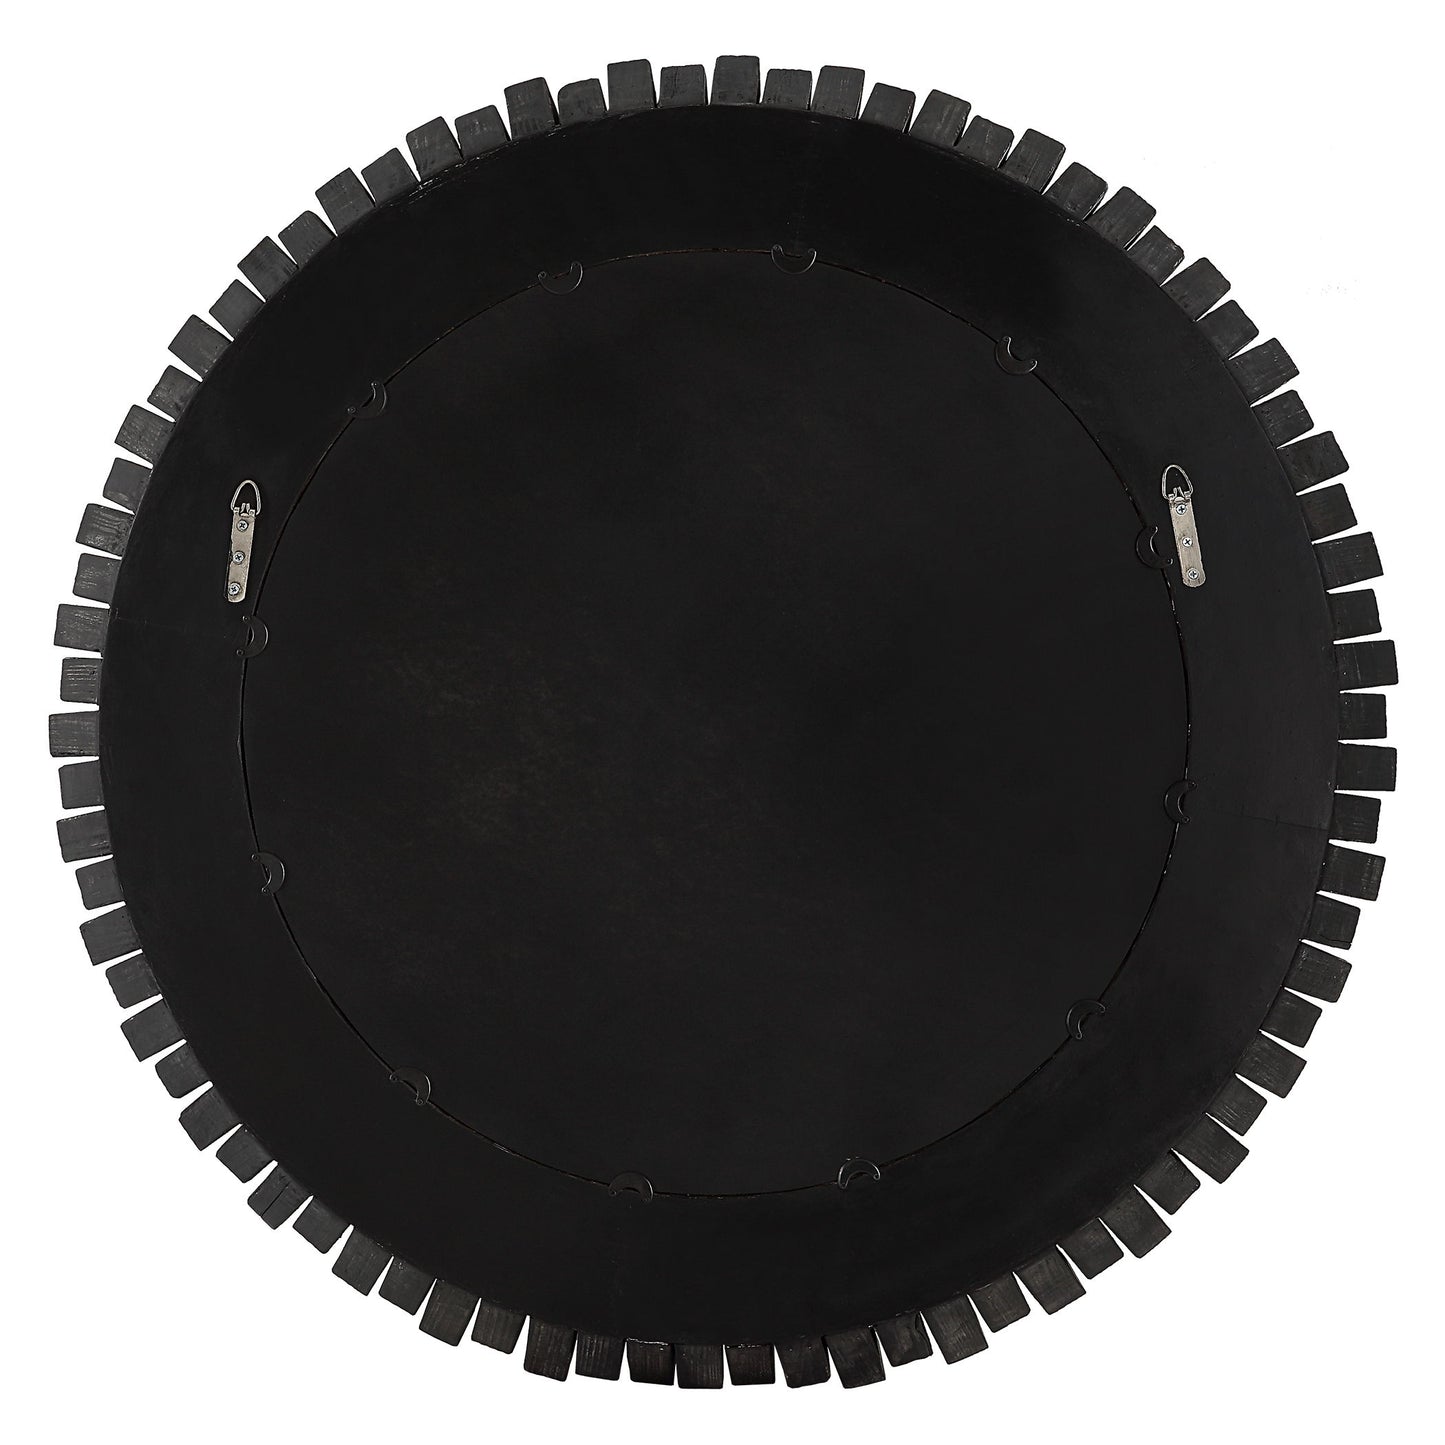 Circle Of Piers - Round Mirror - Black